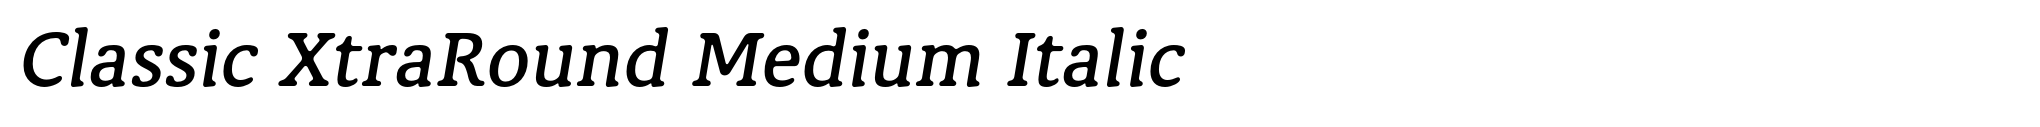 Classic XtraRound Medium Italic image